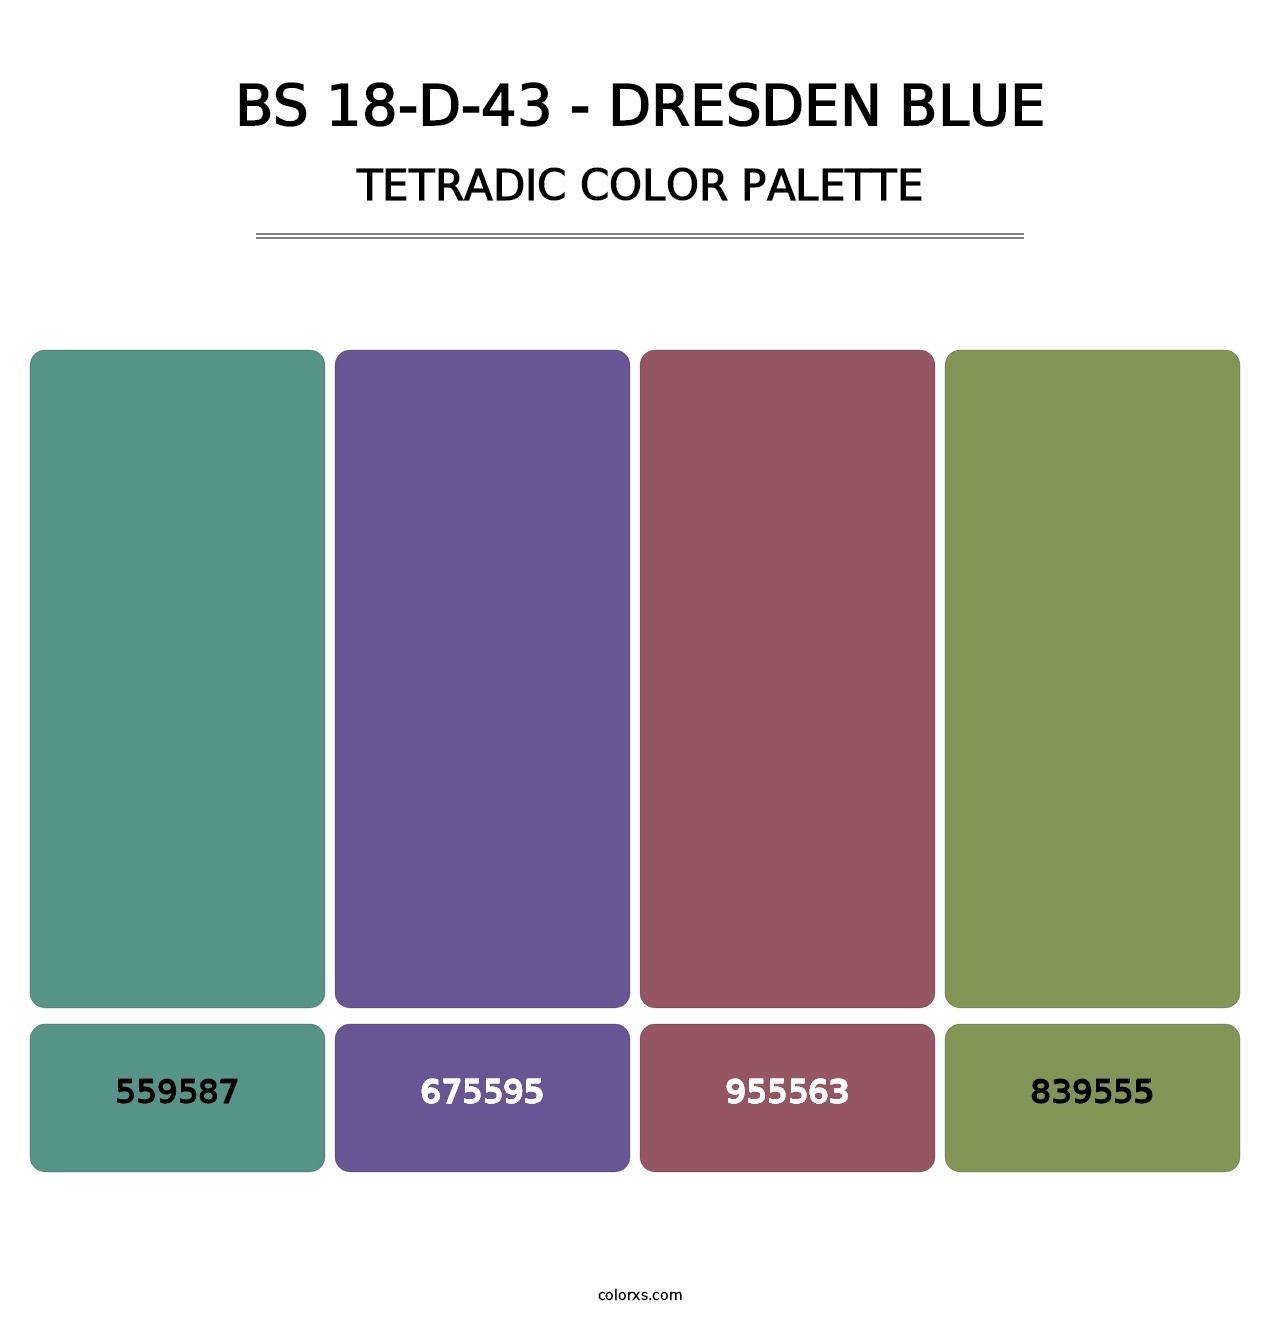 BS 18-D-43 - Dresden Blue - Tetradic Color Palette